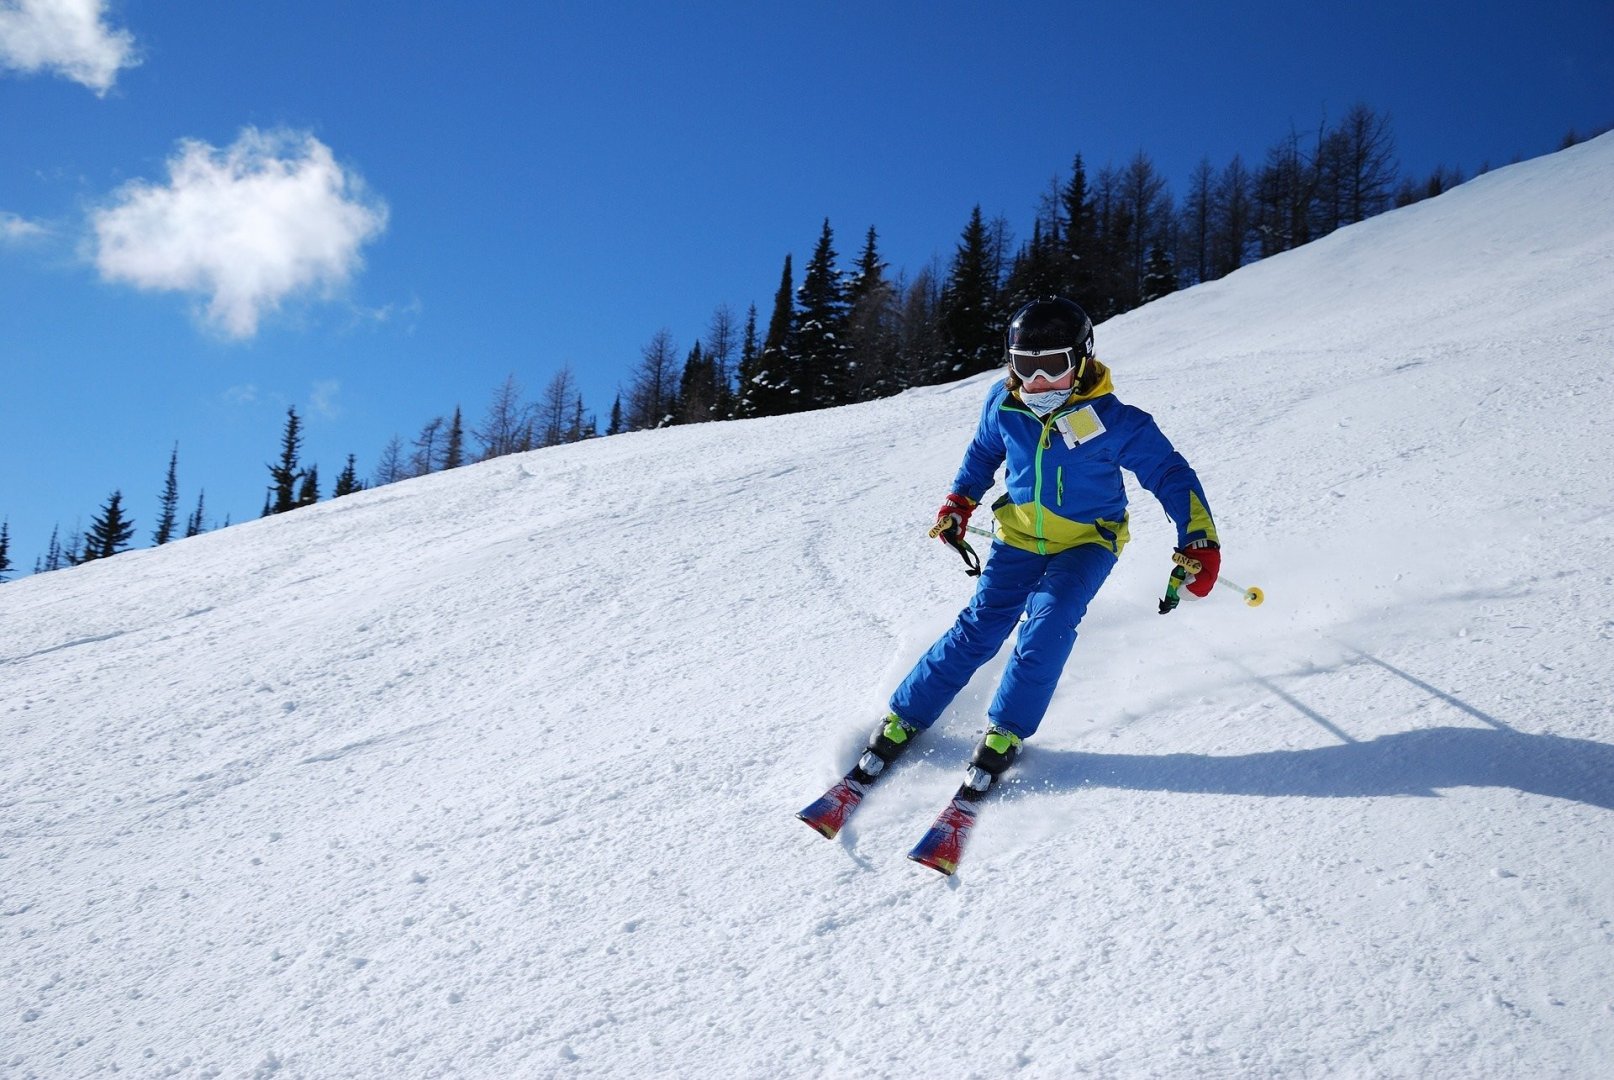 Where to spend your skiing holidays? Polish ski resorts